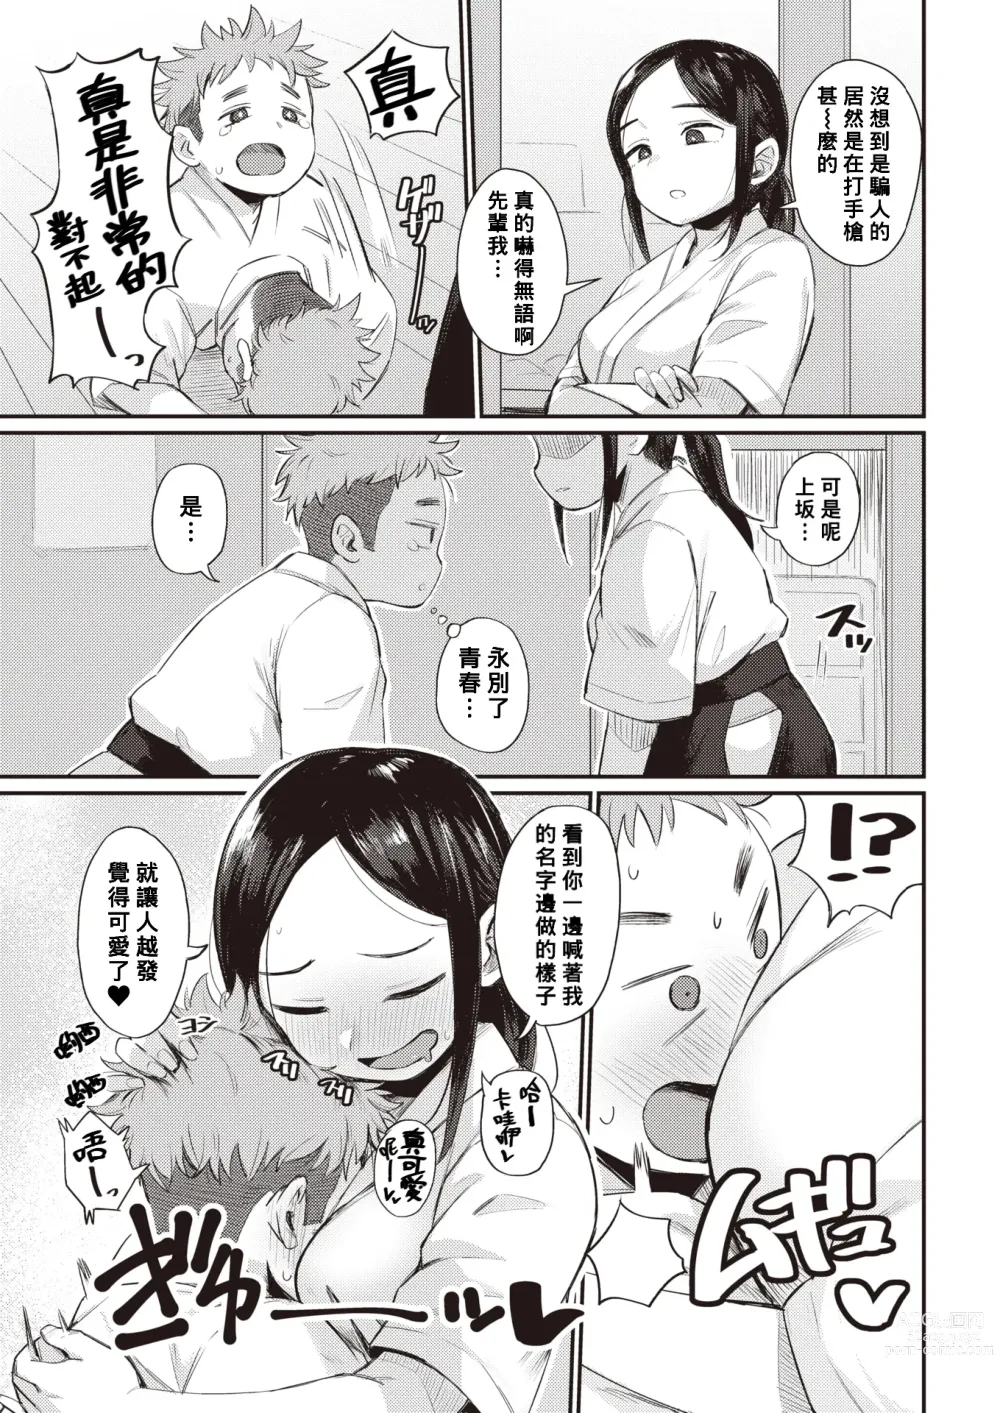 Page 5 of manga Koi no Nioi♡